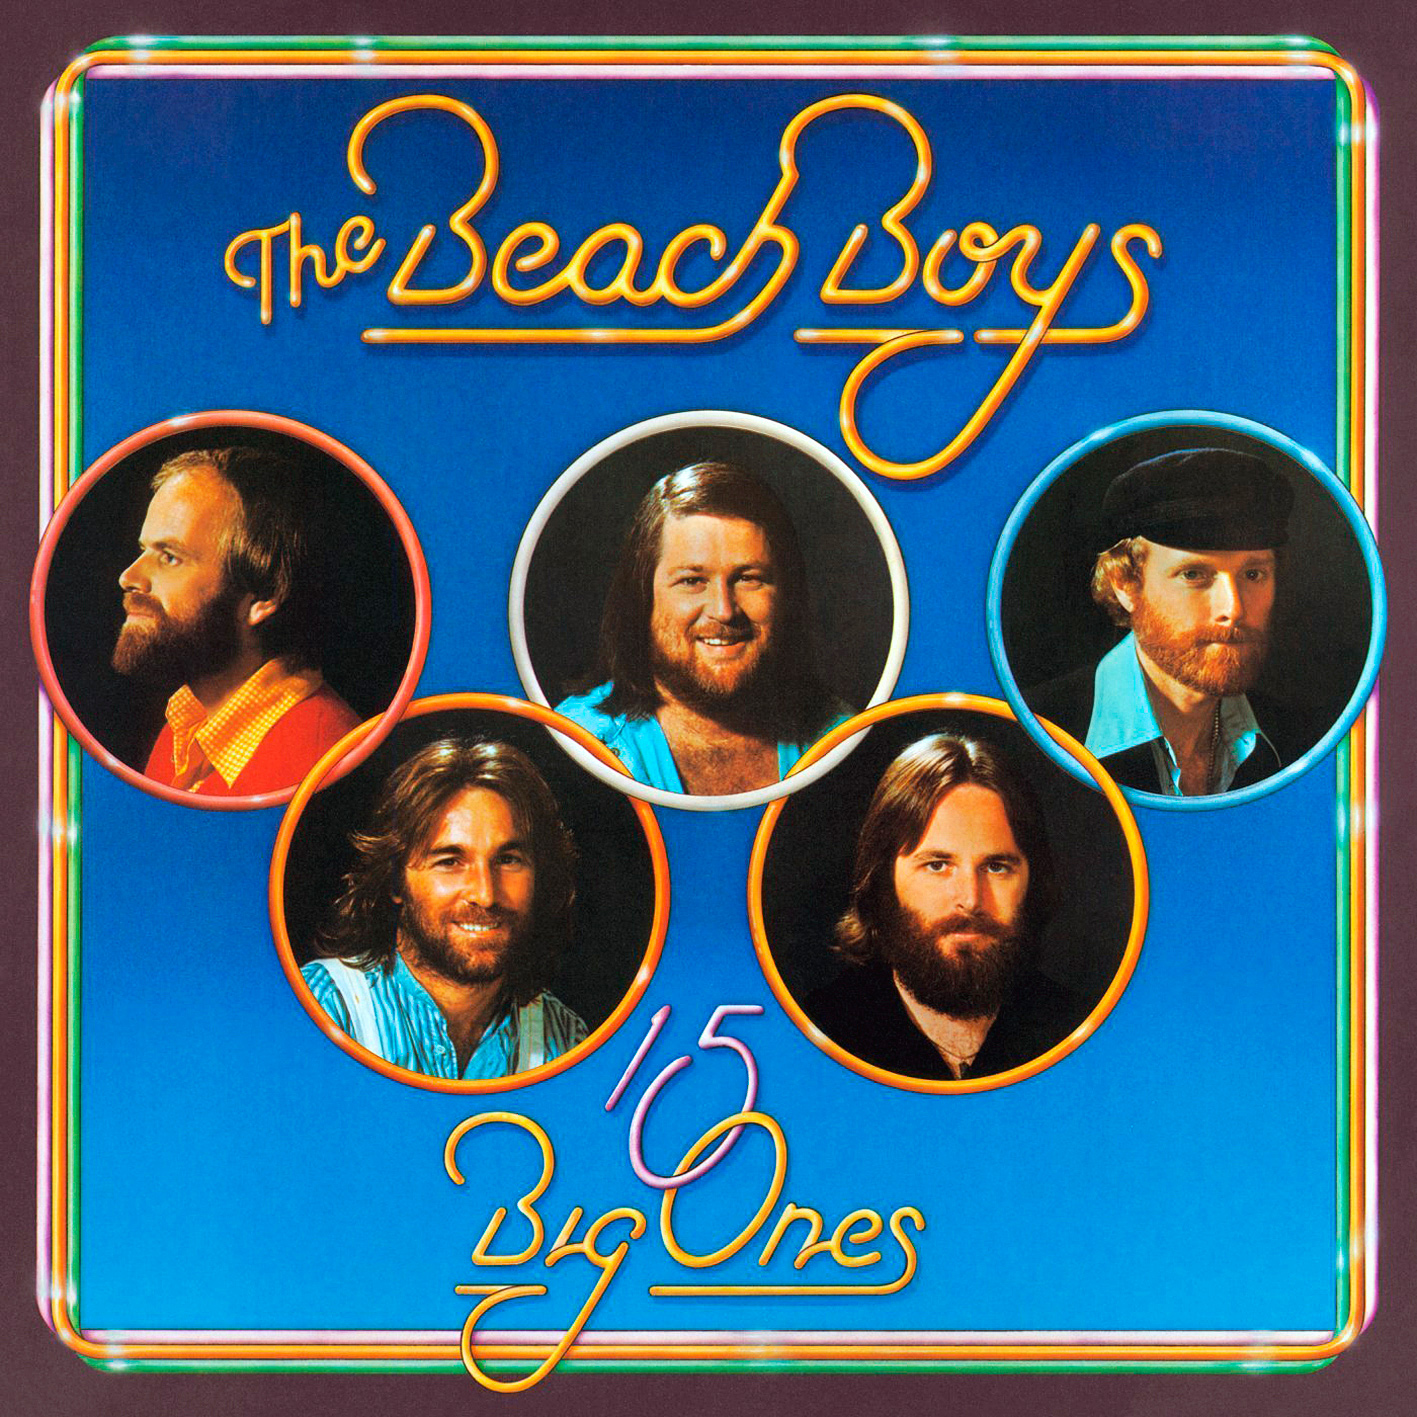 The Beach Boys - 15 Big Ones (1976/2015) [HDTracks FLAC 24bit/192kHz]